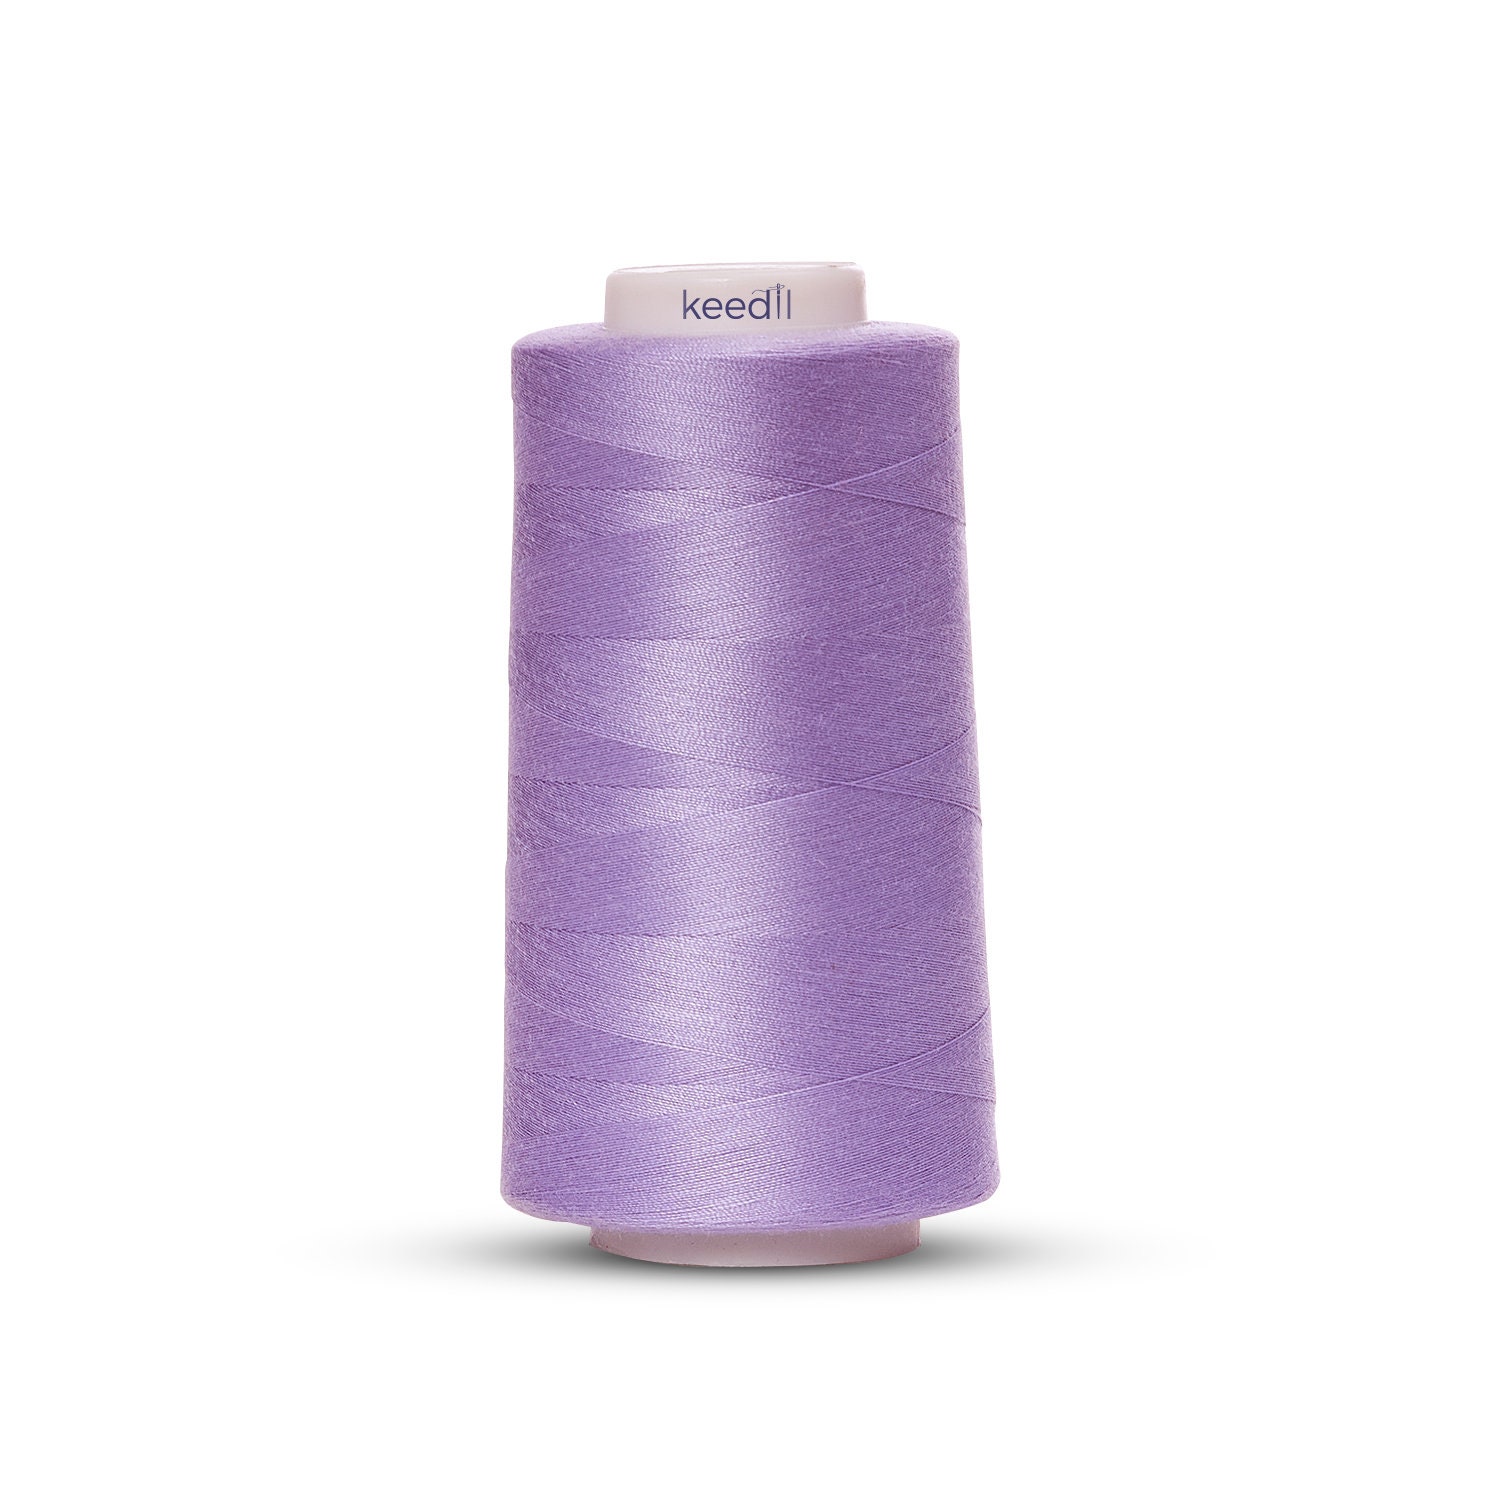 Keedil All Purpose Polyester Serger Sewing Thread - 3000 Yard